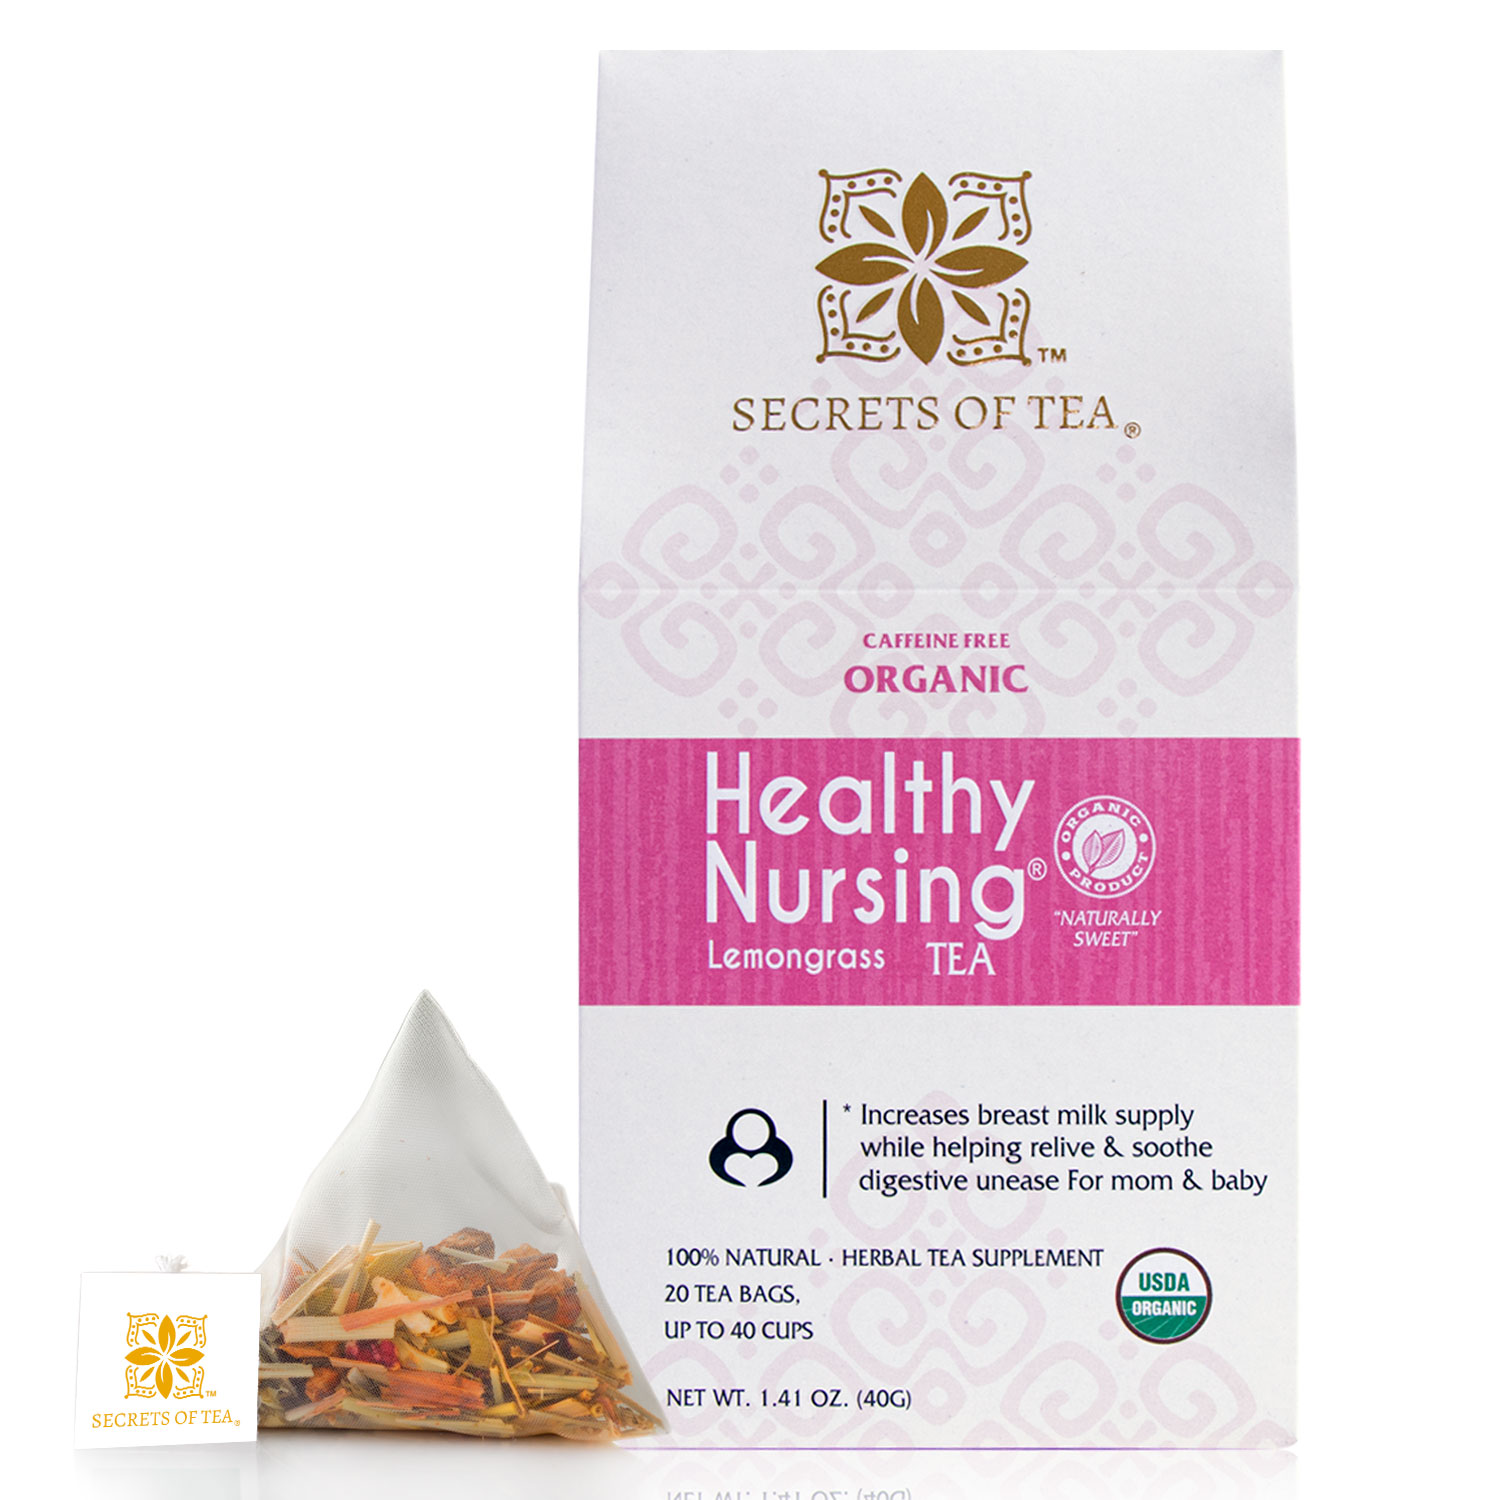 Secrets of Tea Healthy Nursing Lemongrass Tea 2 innerpacks per case 2.0 oz